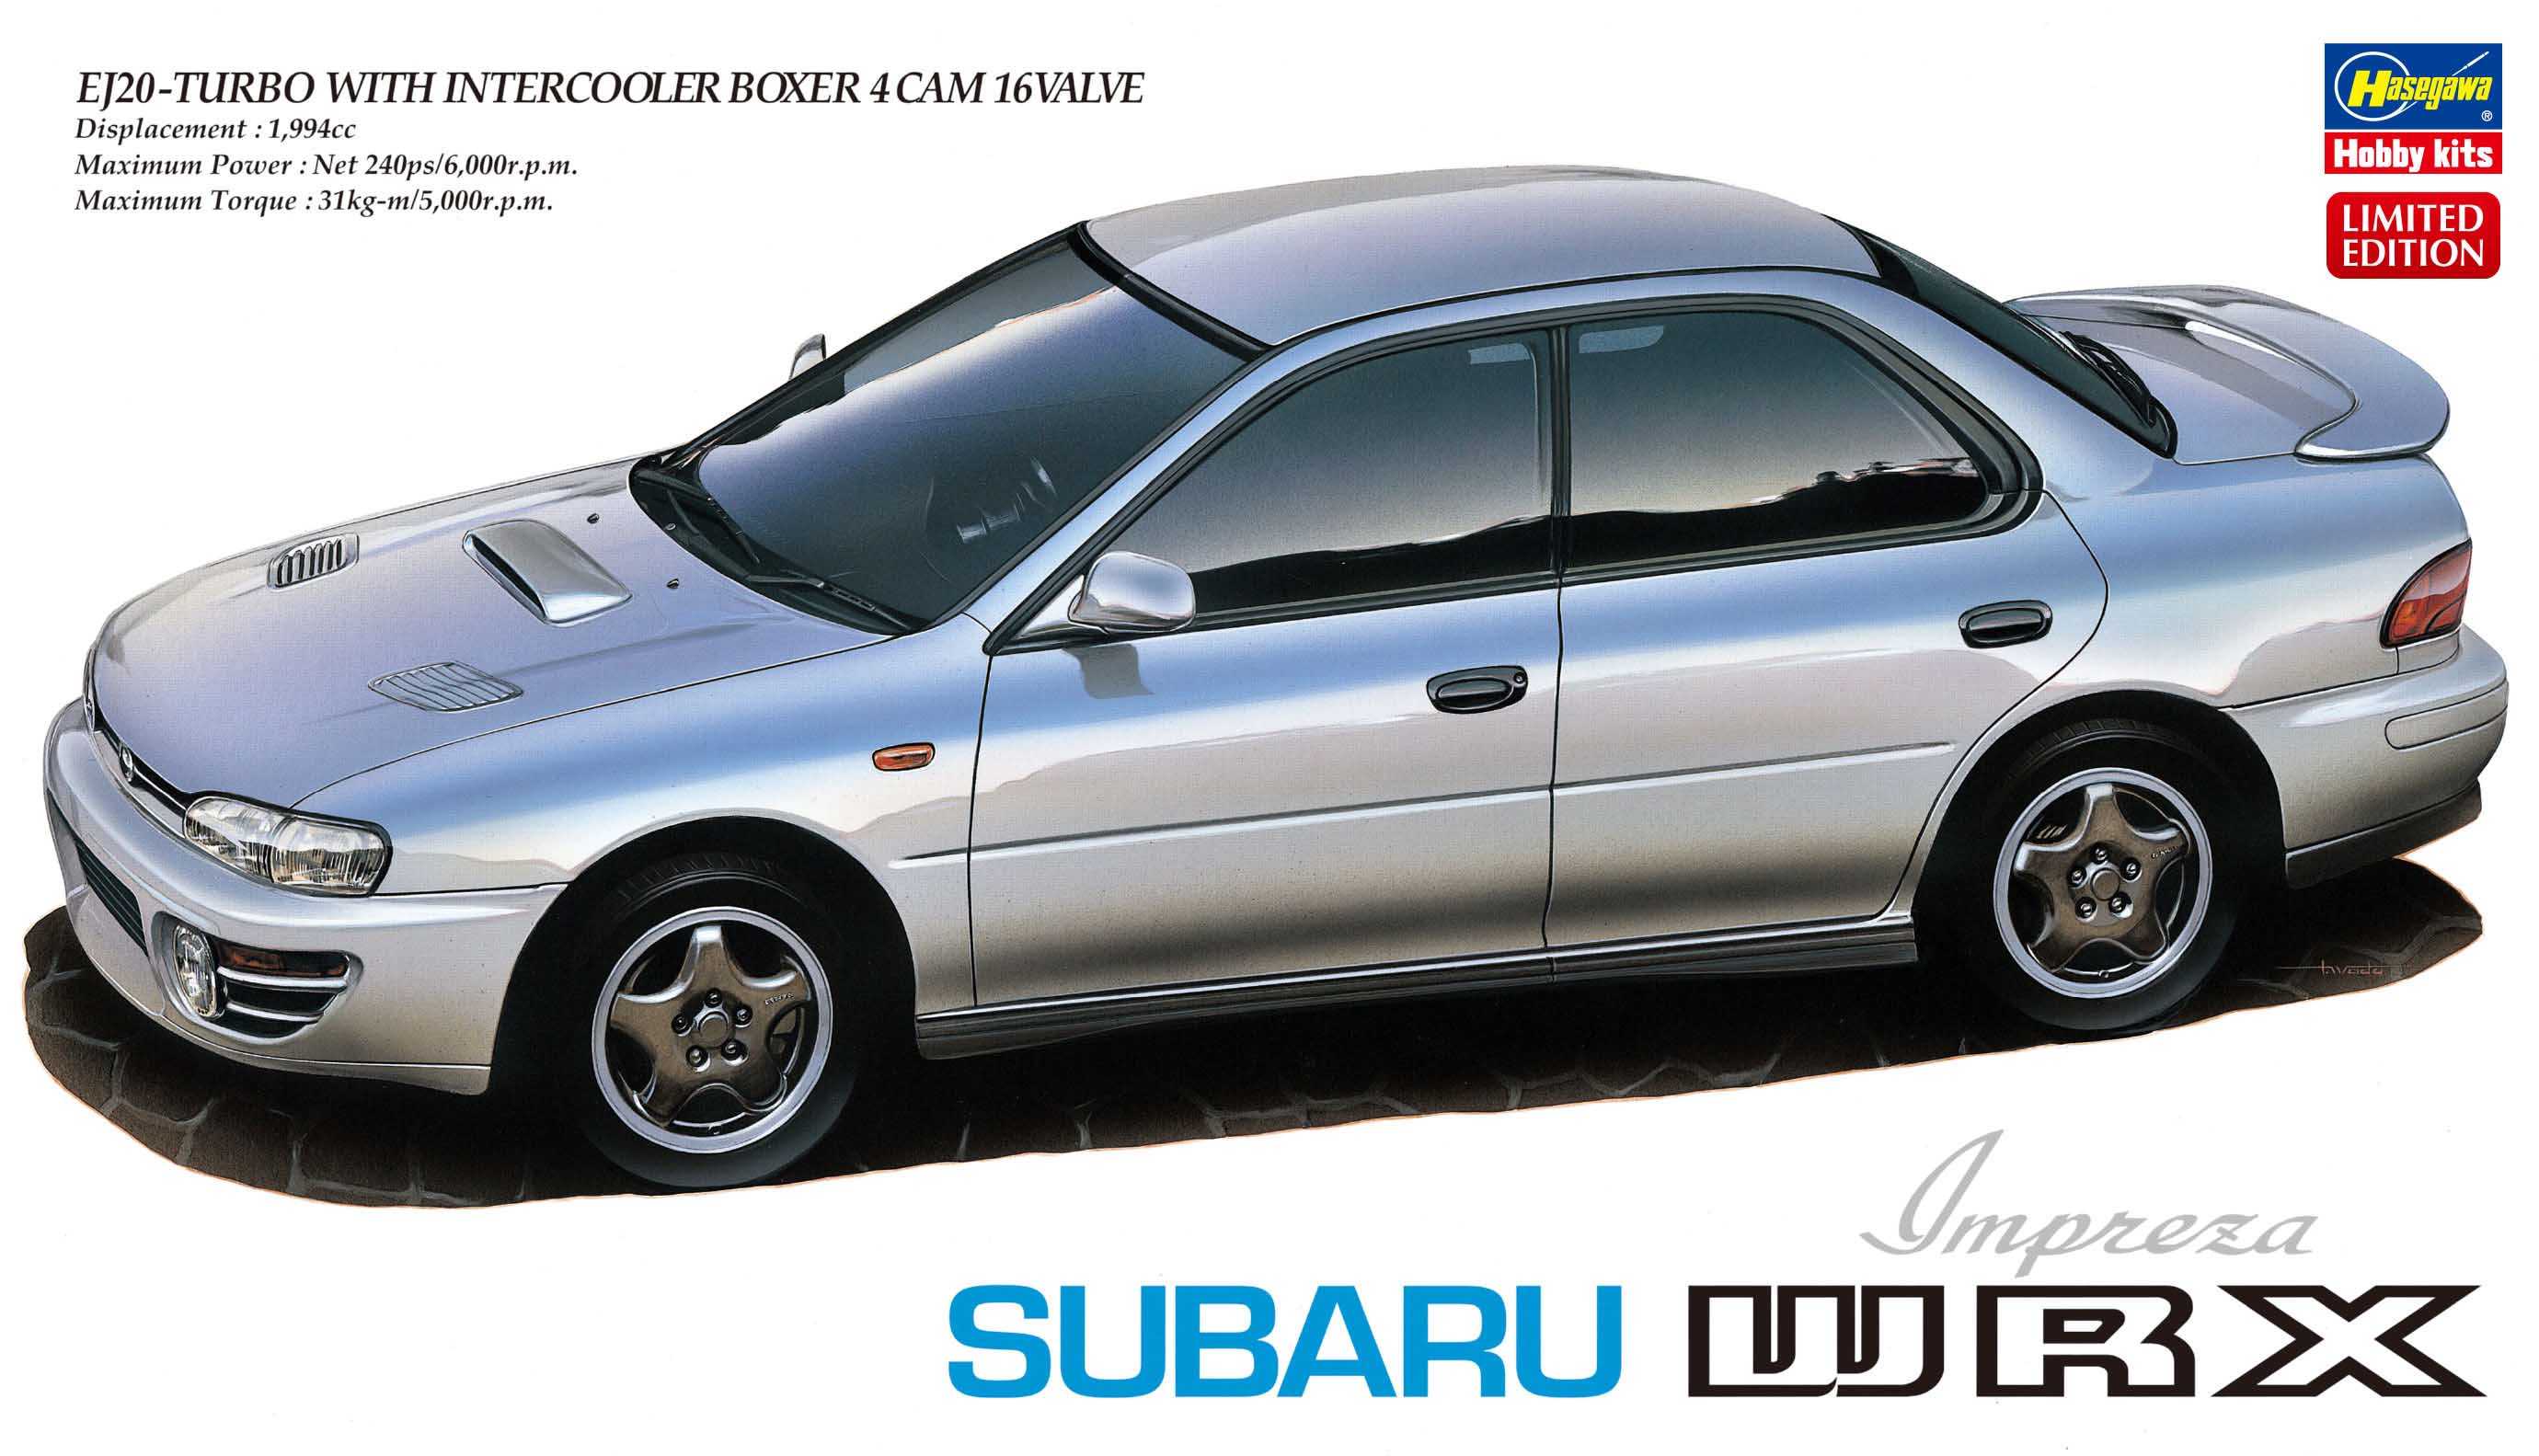 Maquette de voiture - SUBARU Impreza WRX- 1/24 -Hasegawa